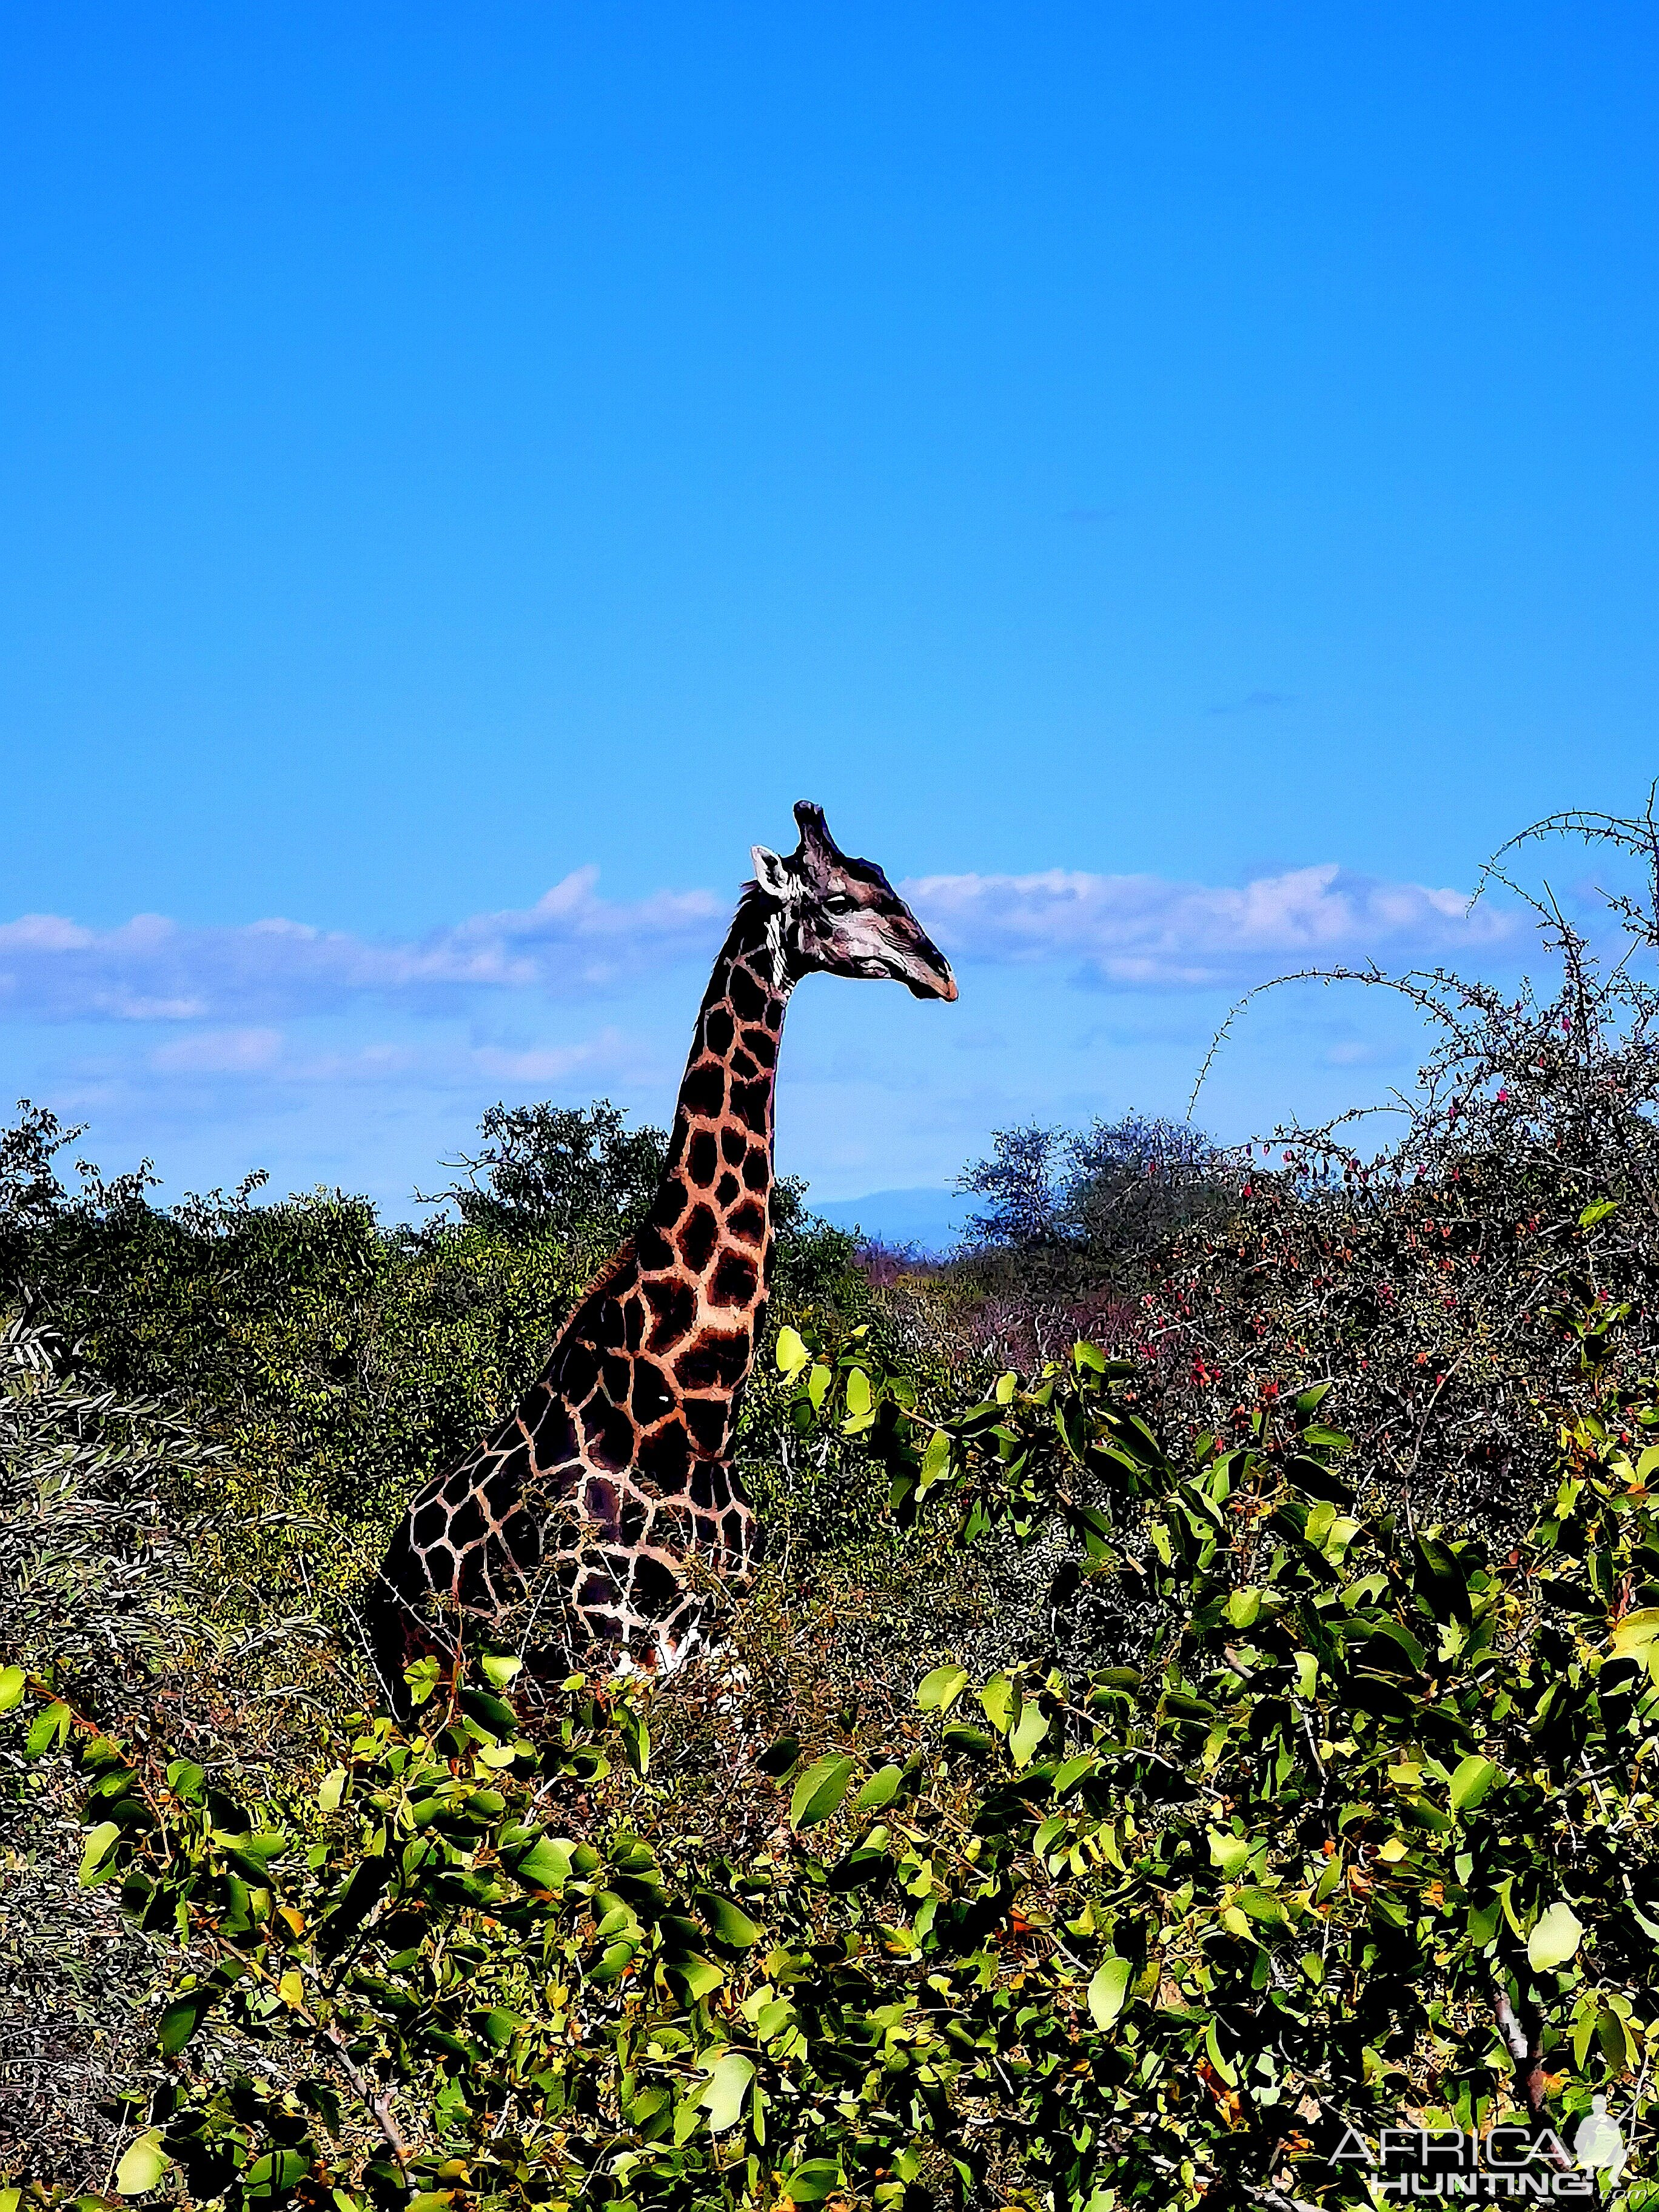 Black Giraffe Wildlife South Africa